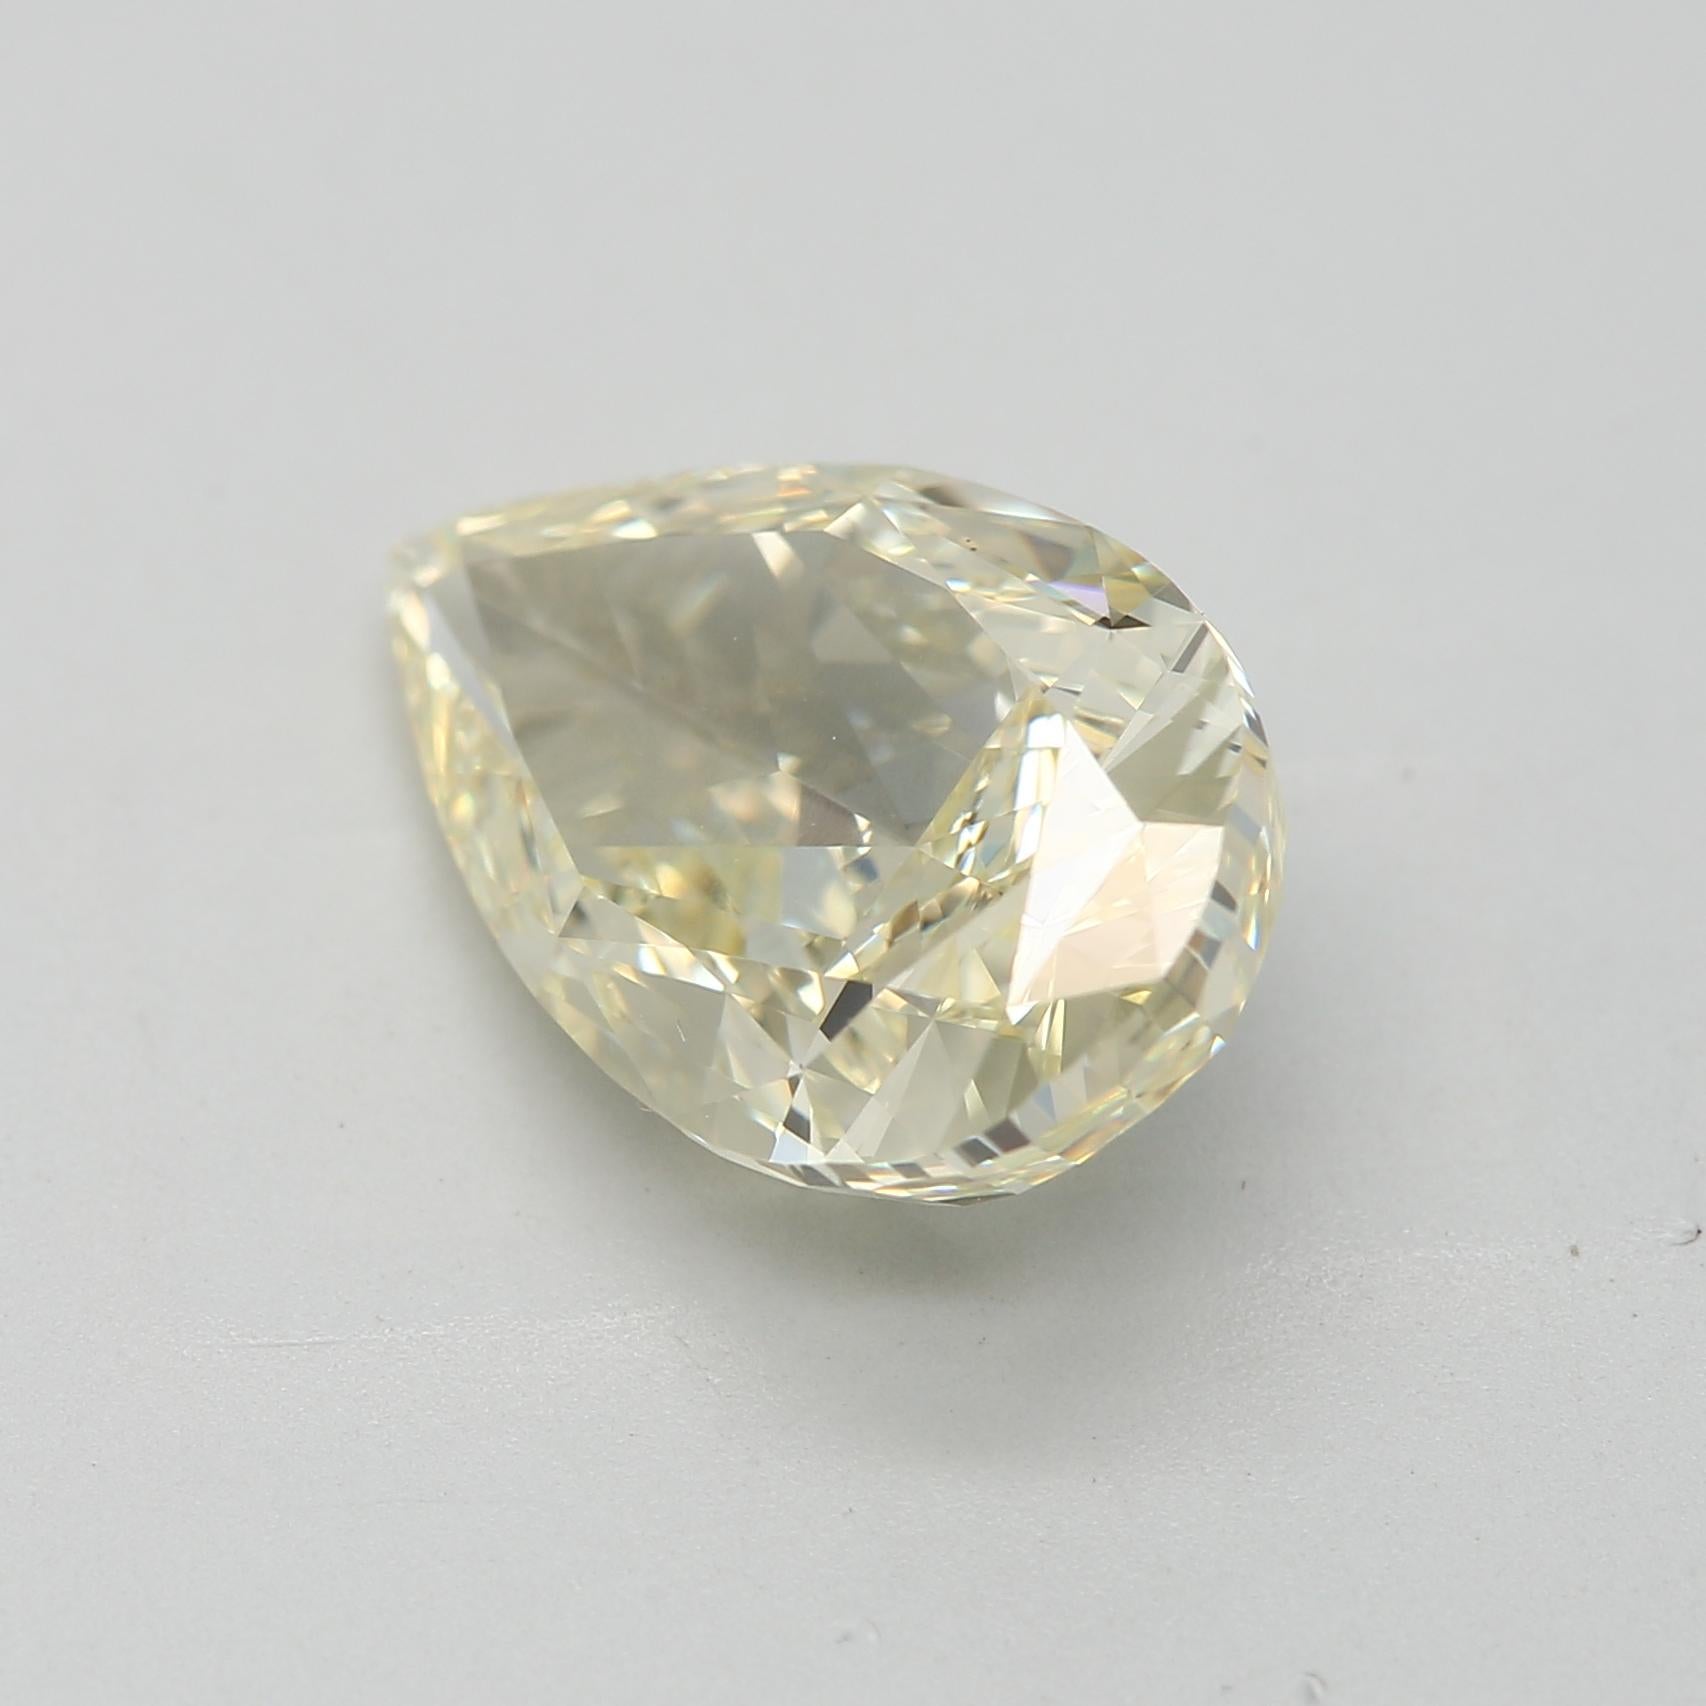 Pear Cut 3.19 Carat Fancy Light Yellow Pear cut diamond VS1 Clarity GIA Certified  For Sale